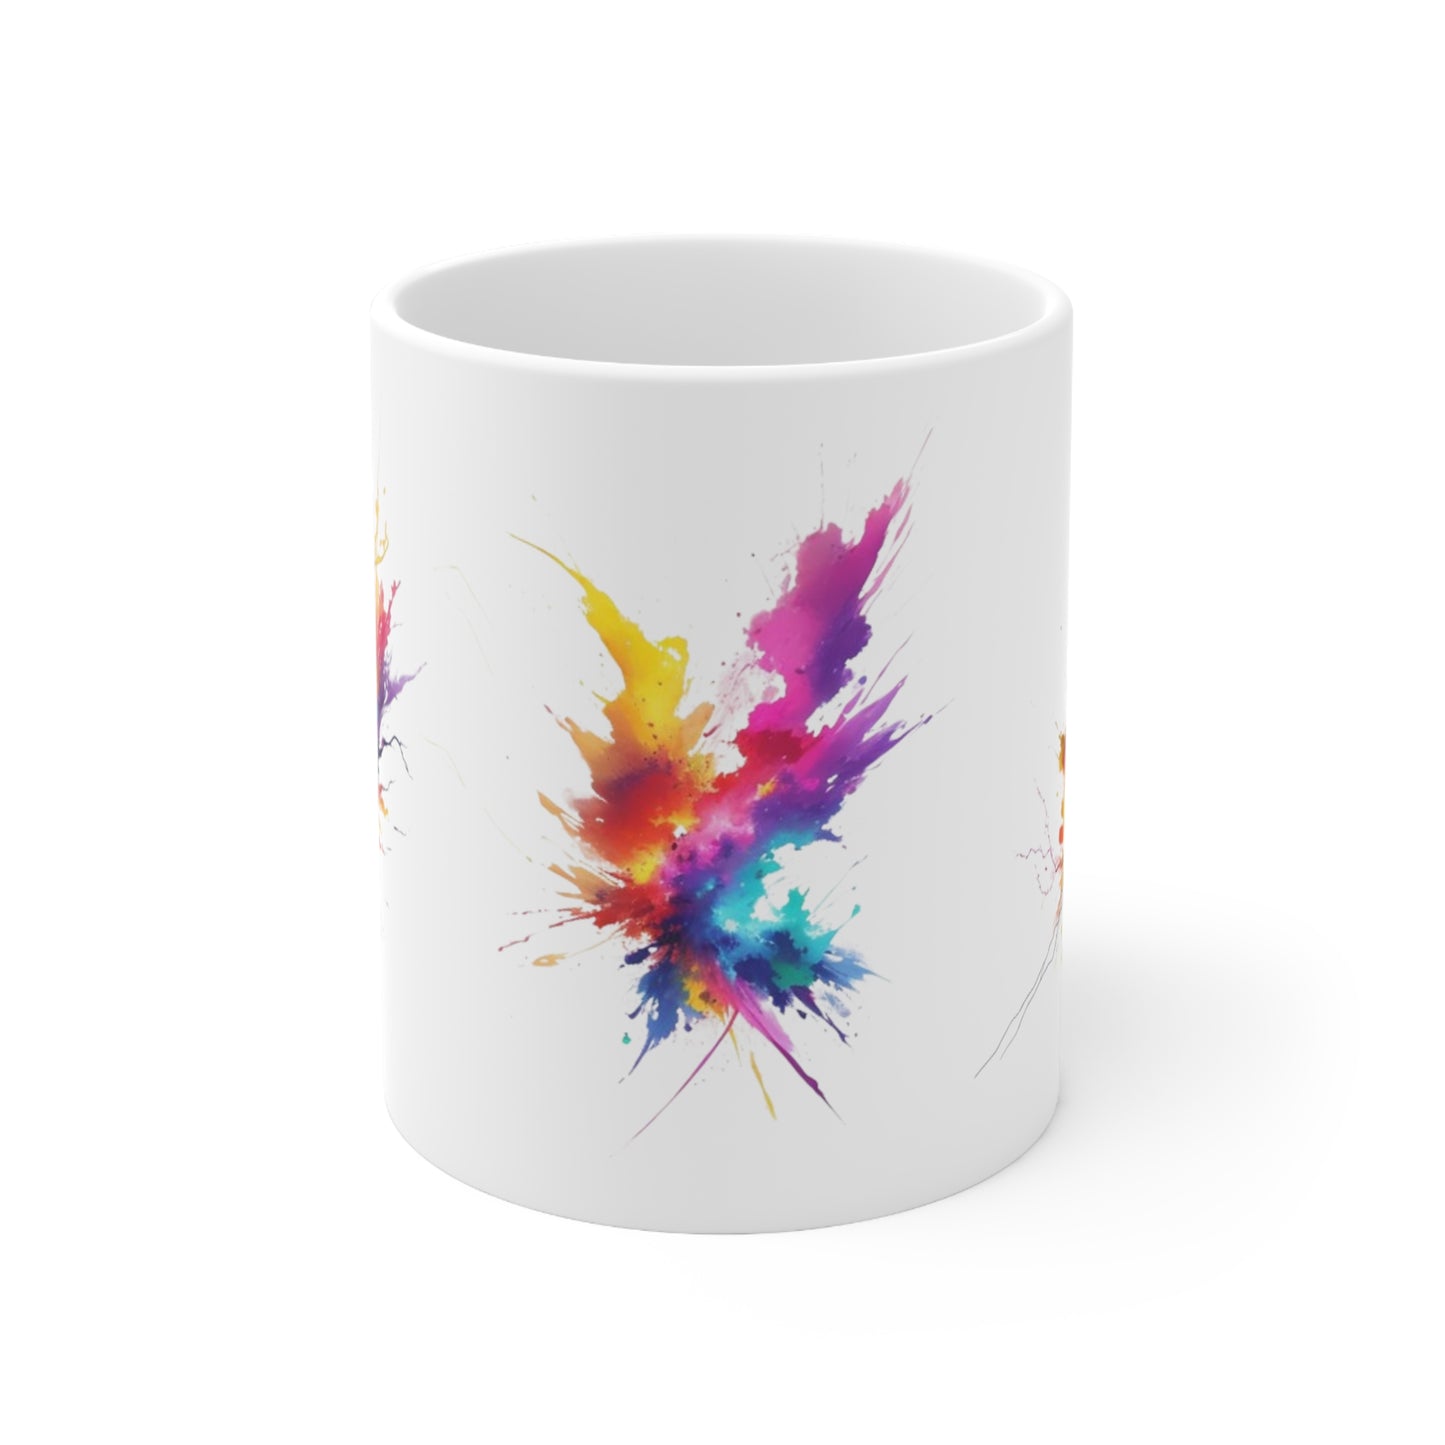 Colourful Lightning Bolt Messy Art Mug - Ceramic Coffee Mug 11oz